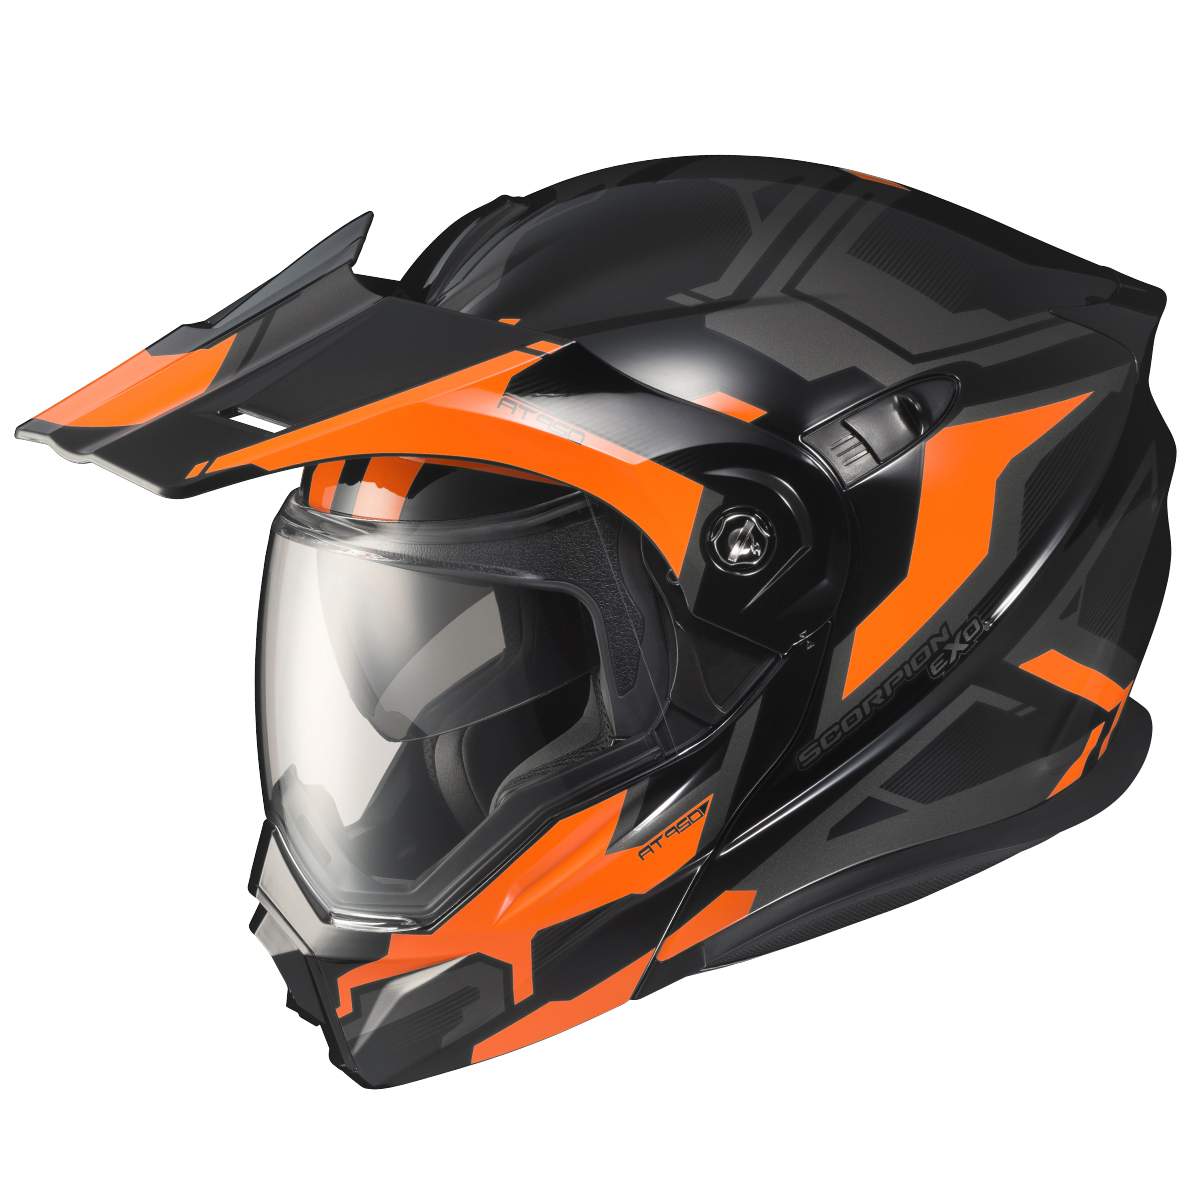 The Scorpion EXO-AT950 helmet.